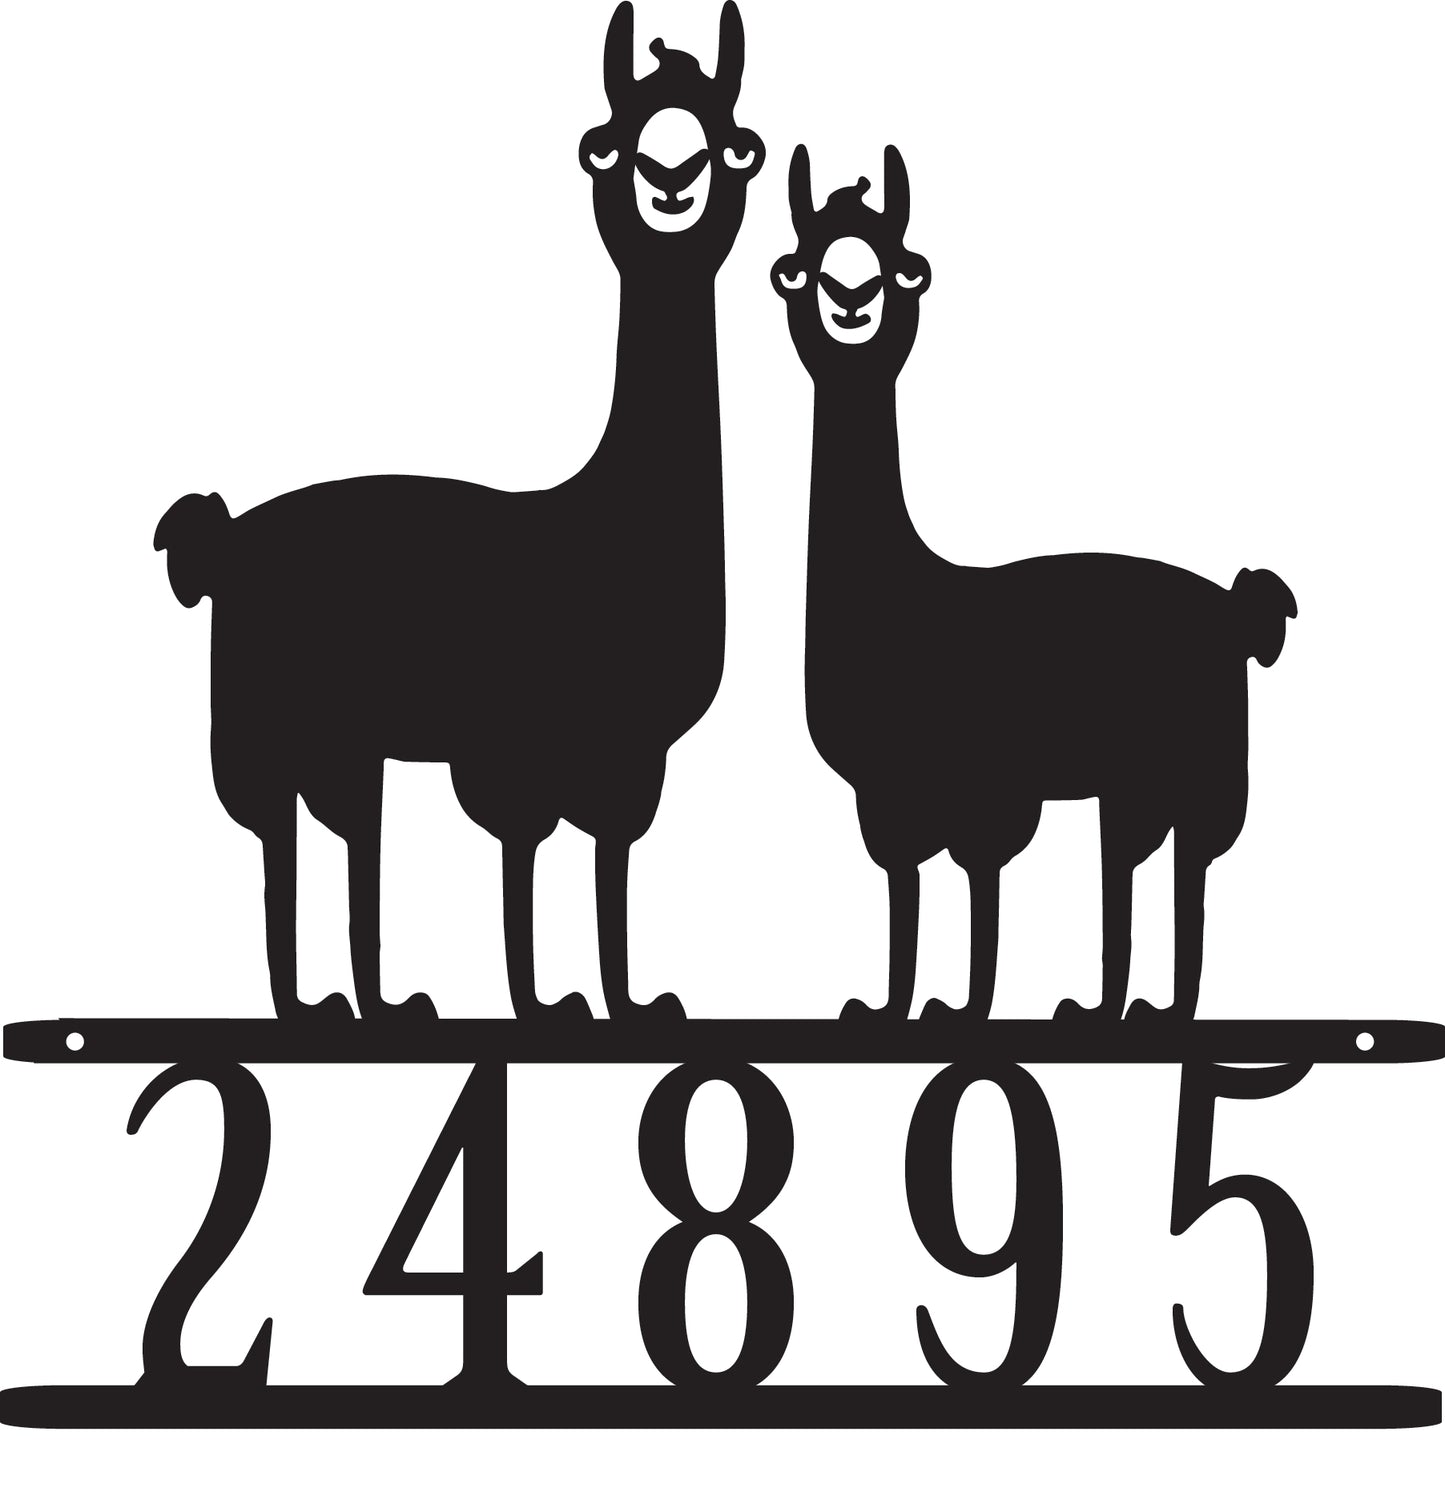 Peronsalized Lama Address Plaque